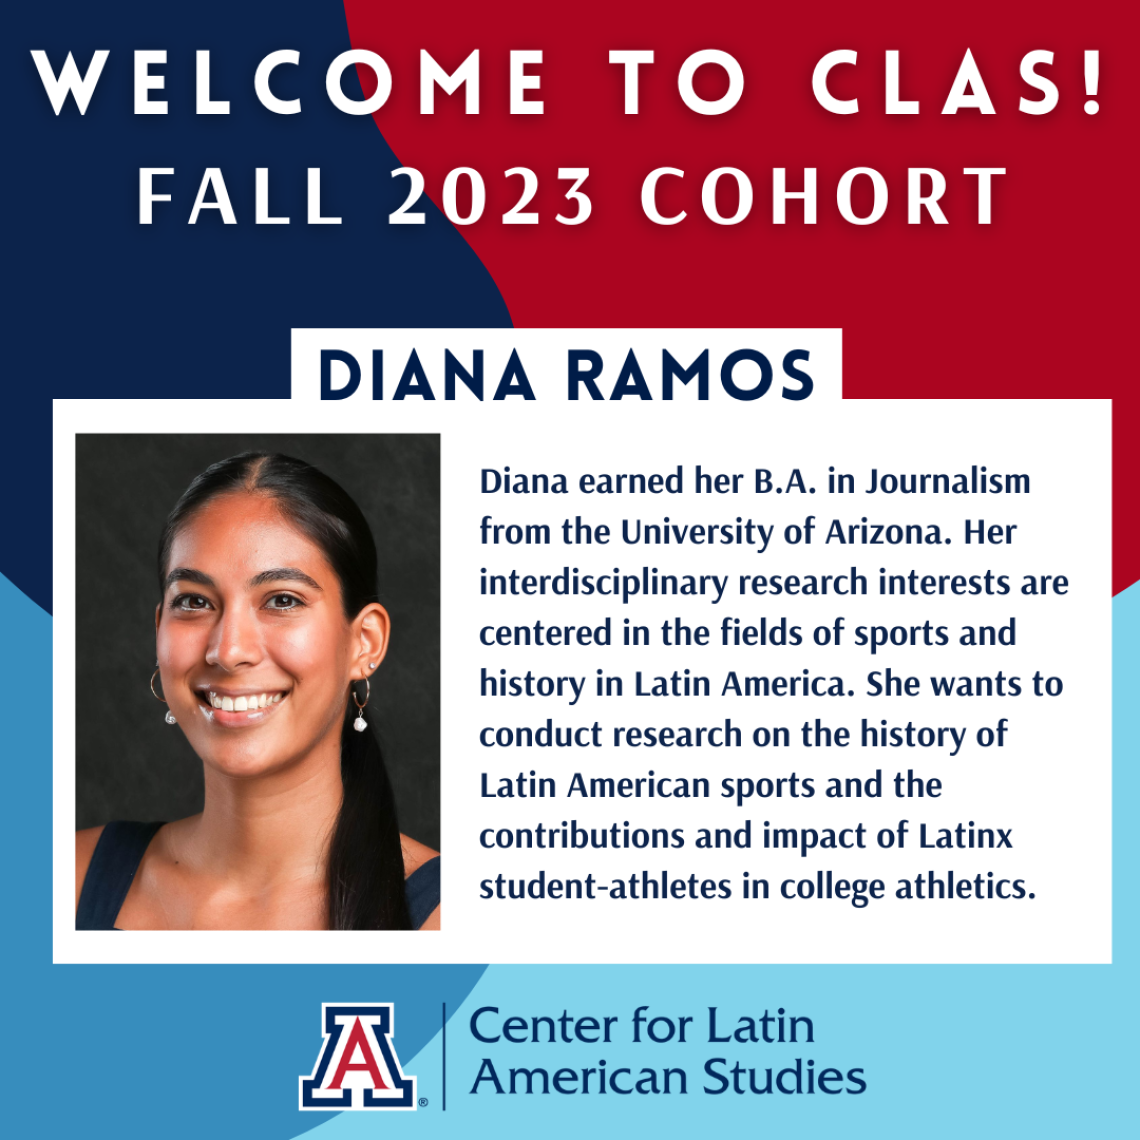 Diana Ramos